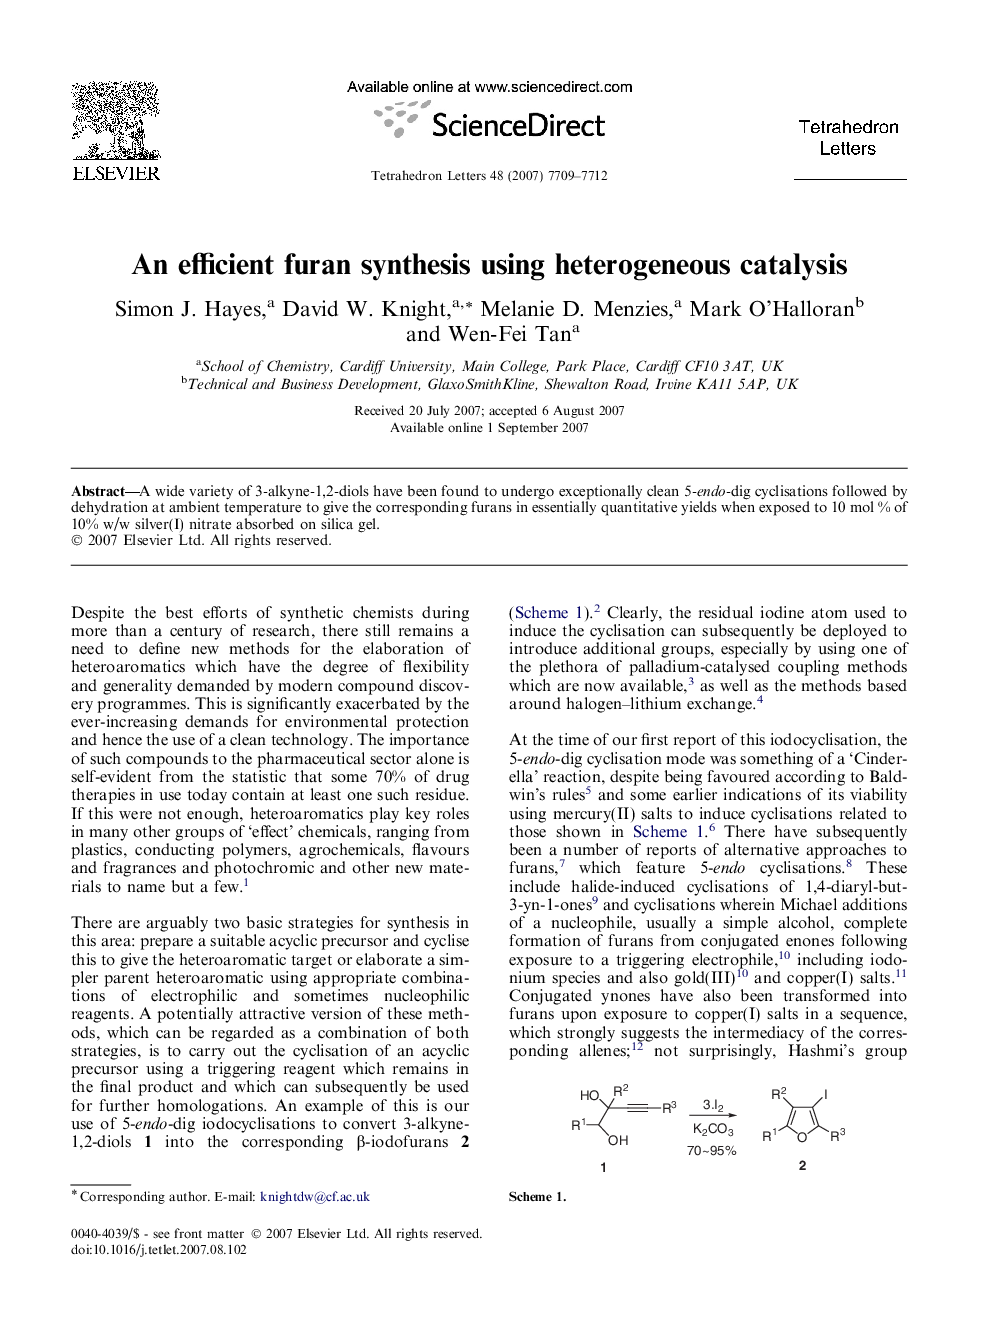 An efficient furan synthesis using heterogeneous catalysis